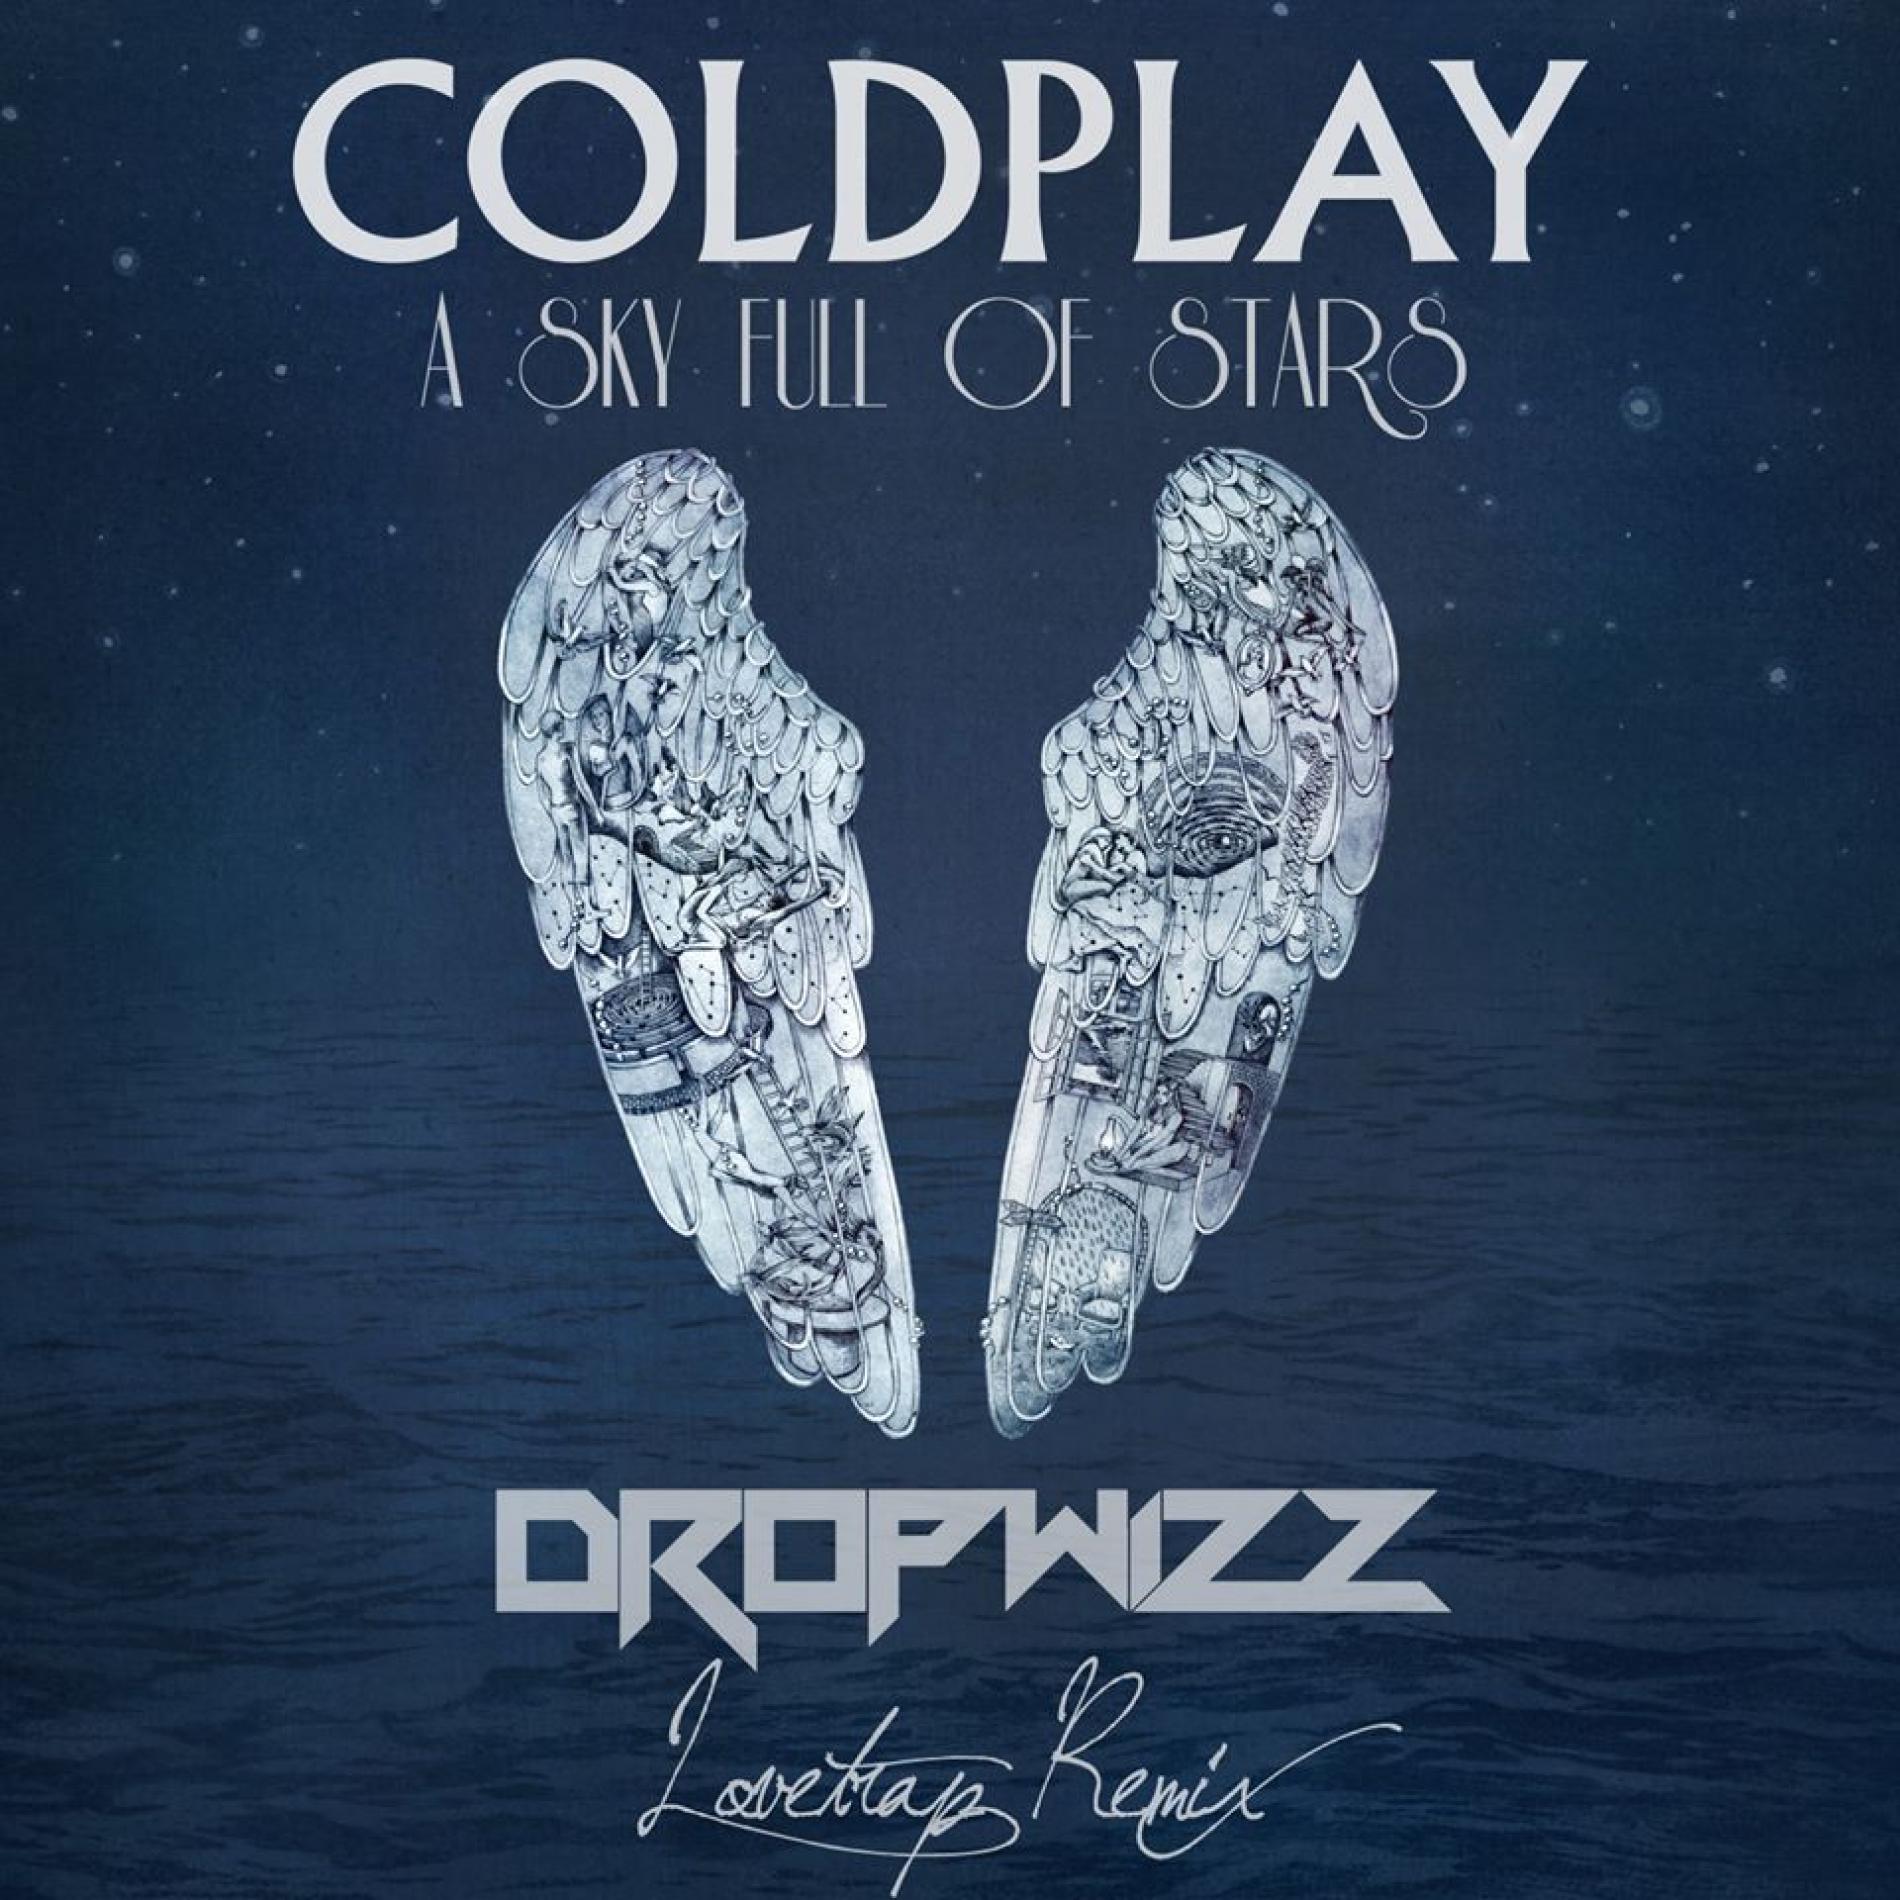 Coldplay – A Sky Full of Stars (Dropwizz LoveTrap Remix)